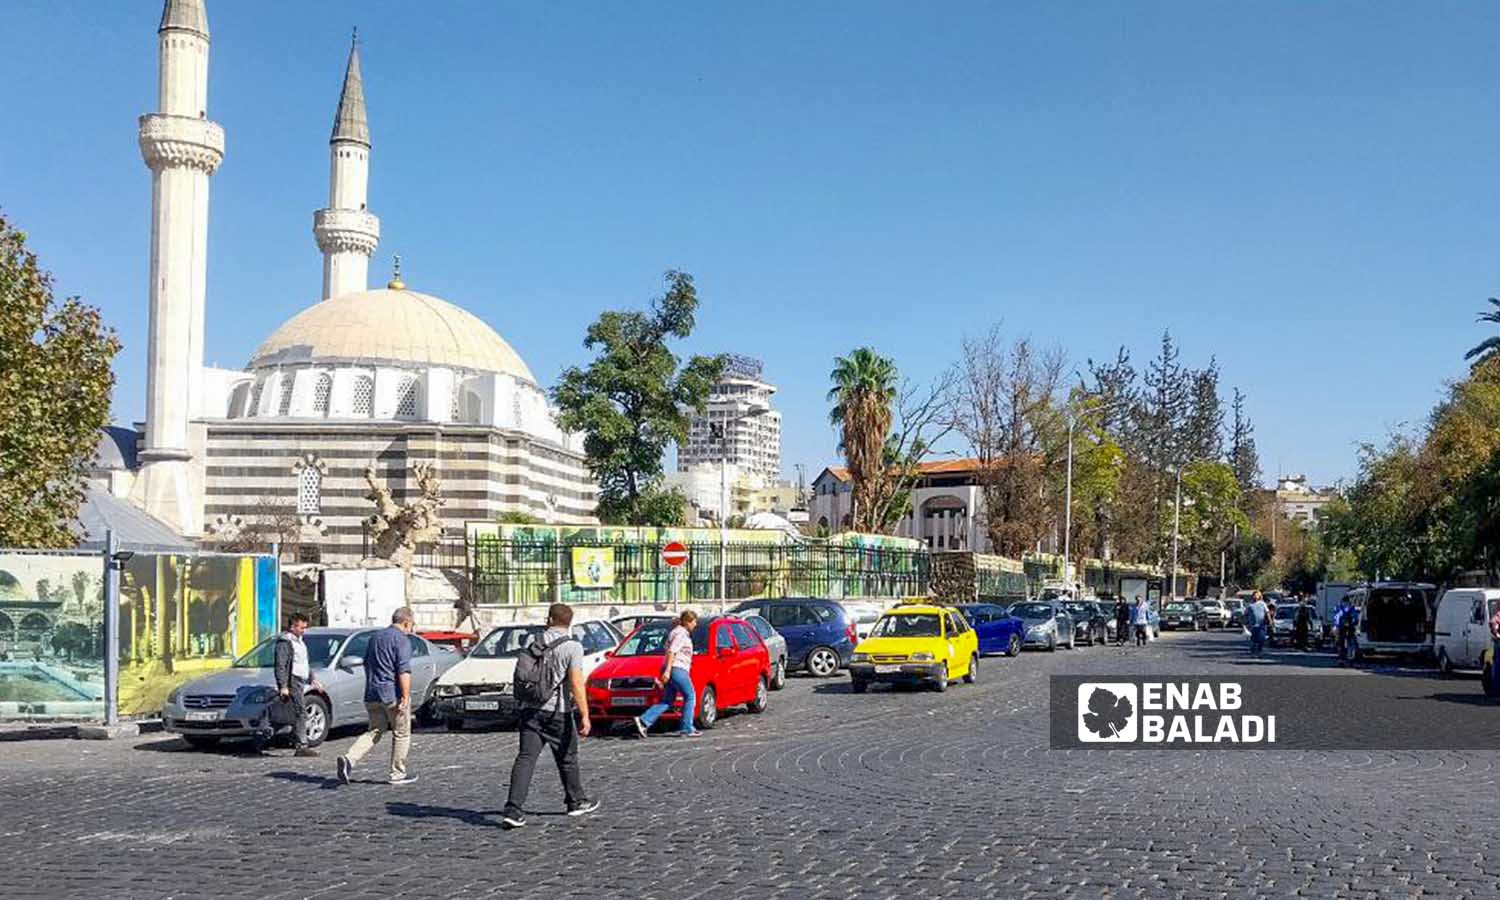 Al-Hijaz Square in Damascus - October 26, 2023 (Enab Baladi/Sarah al-Ahmad)
